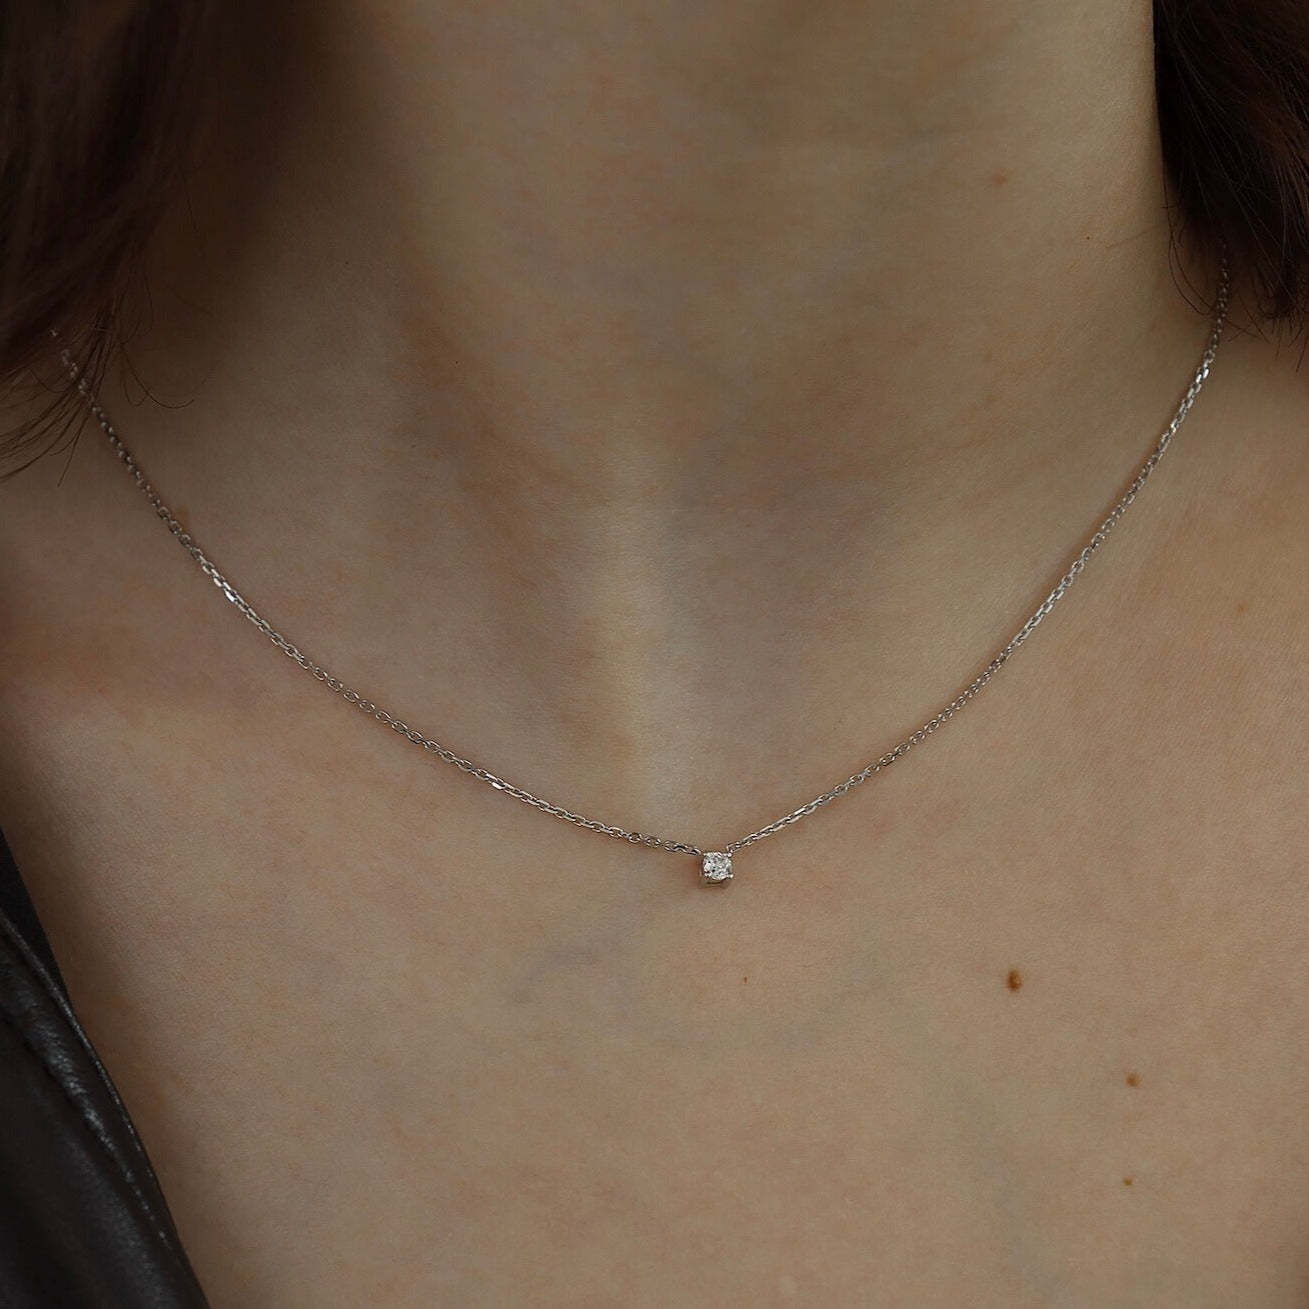 14K Princess Diamond Necklace Necklaces IceLink-CAL 14K White Gold  